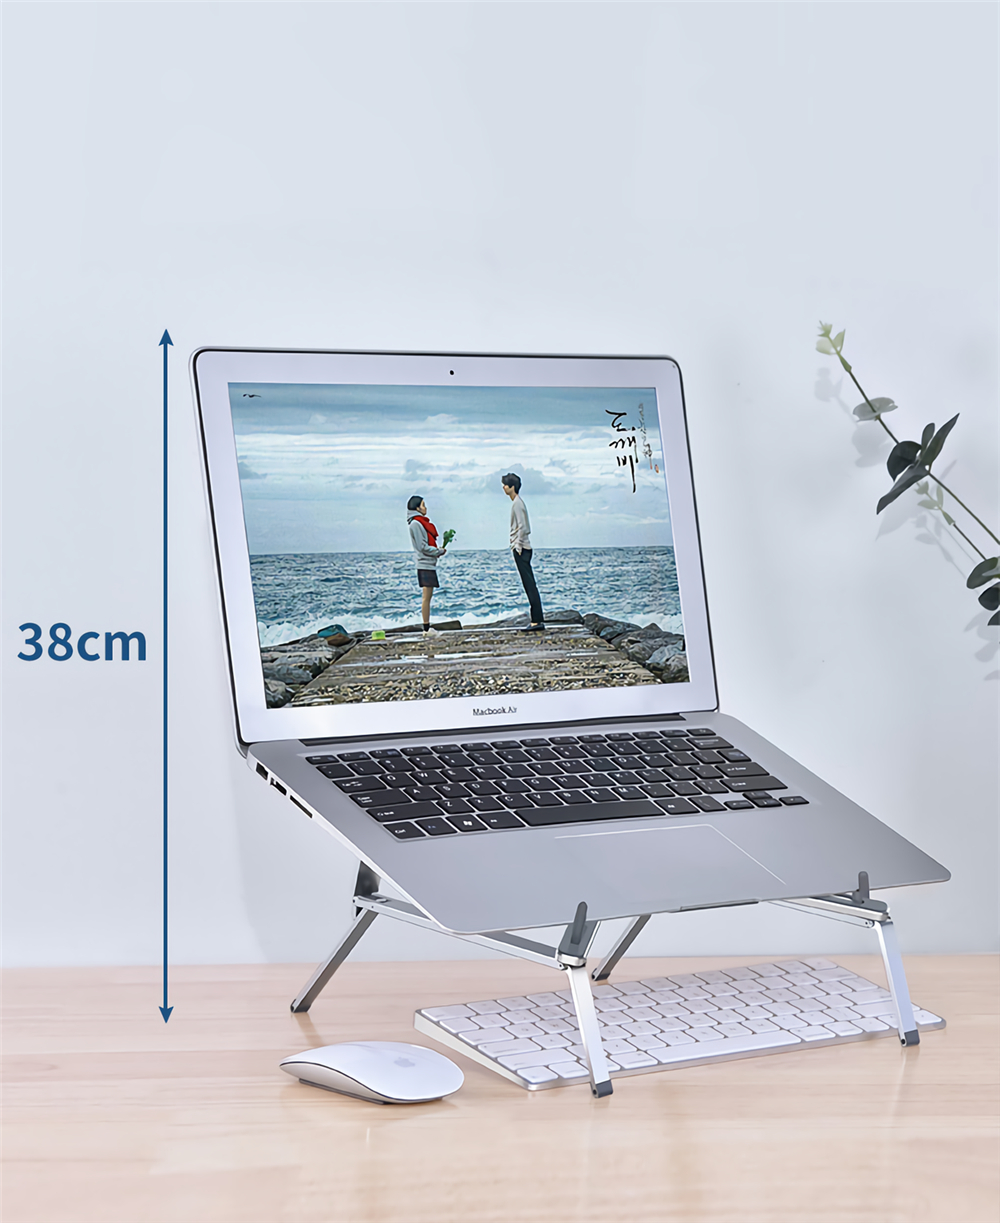 Oatsbasf-Laptop-Stand-Foldable-Portable-Height-Adjustable-Eye-Level-Ergonomic-Notebook-Laptop-Bracke-1713477-5